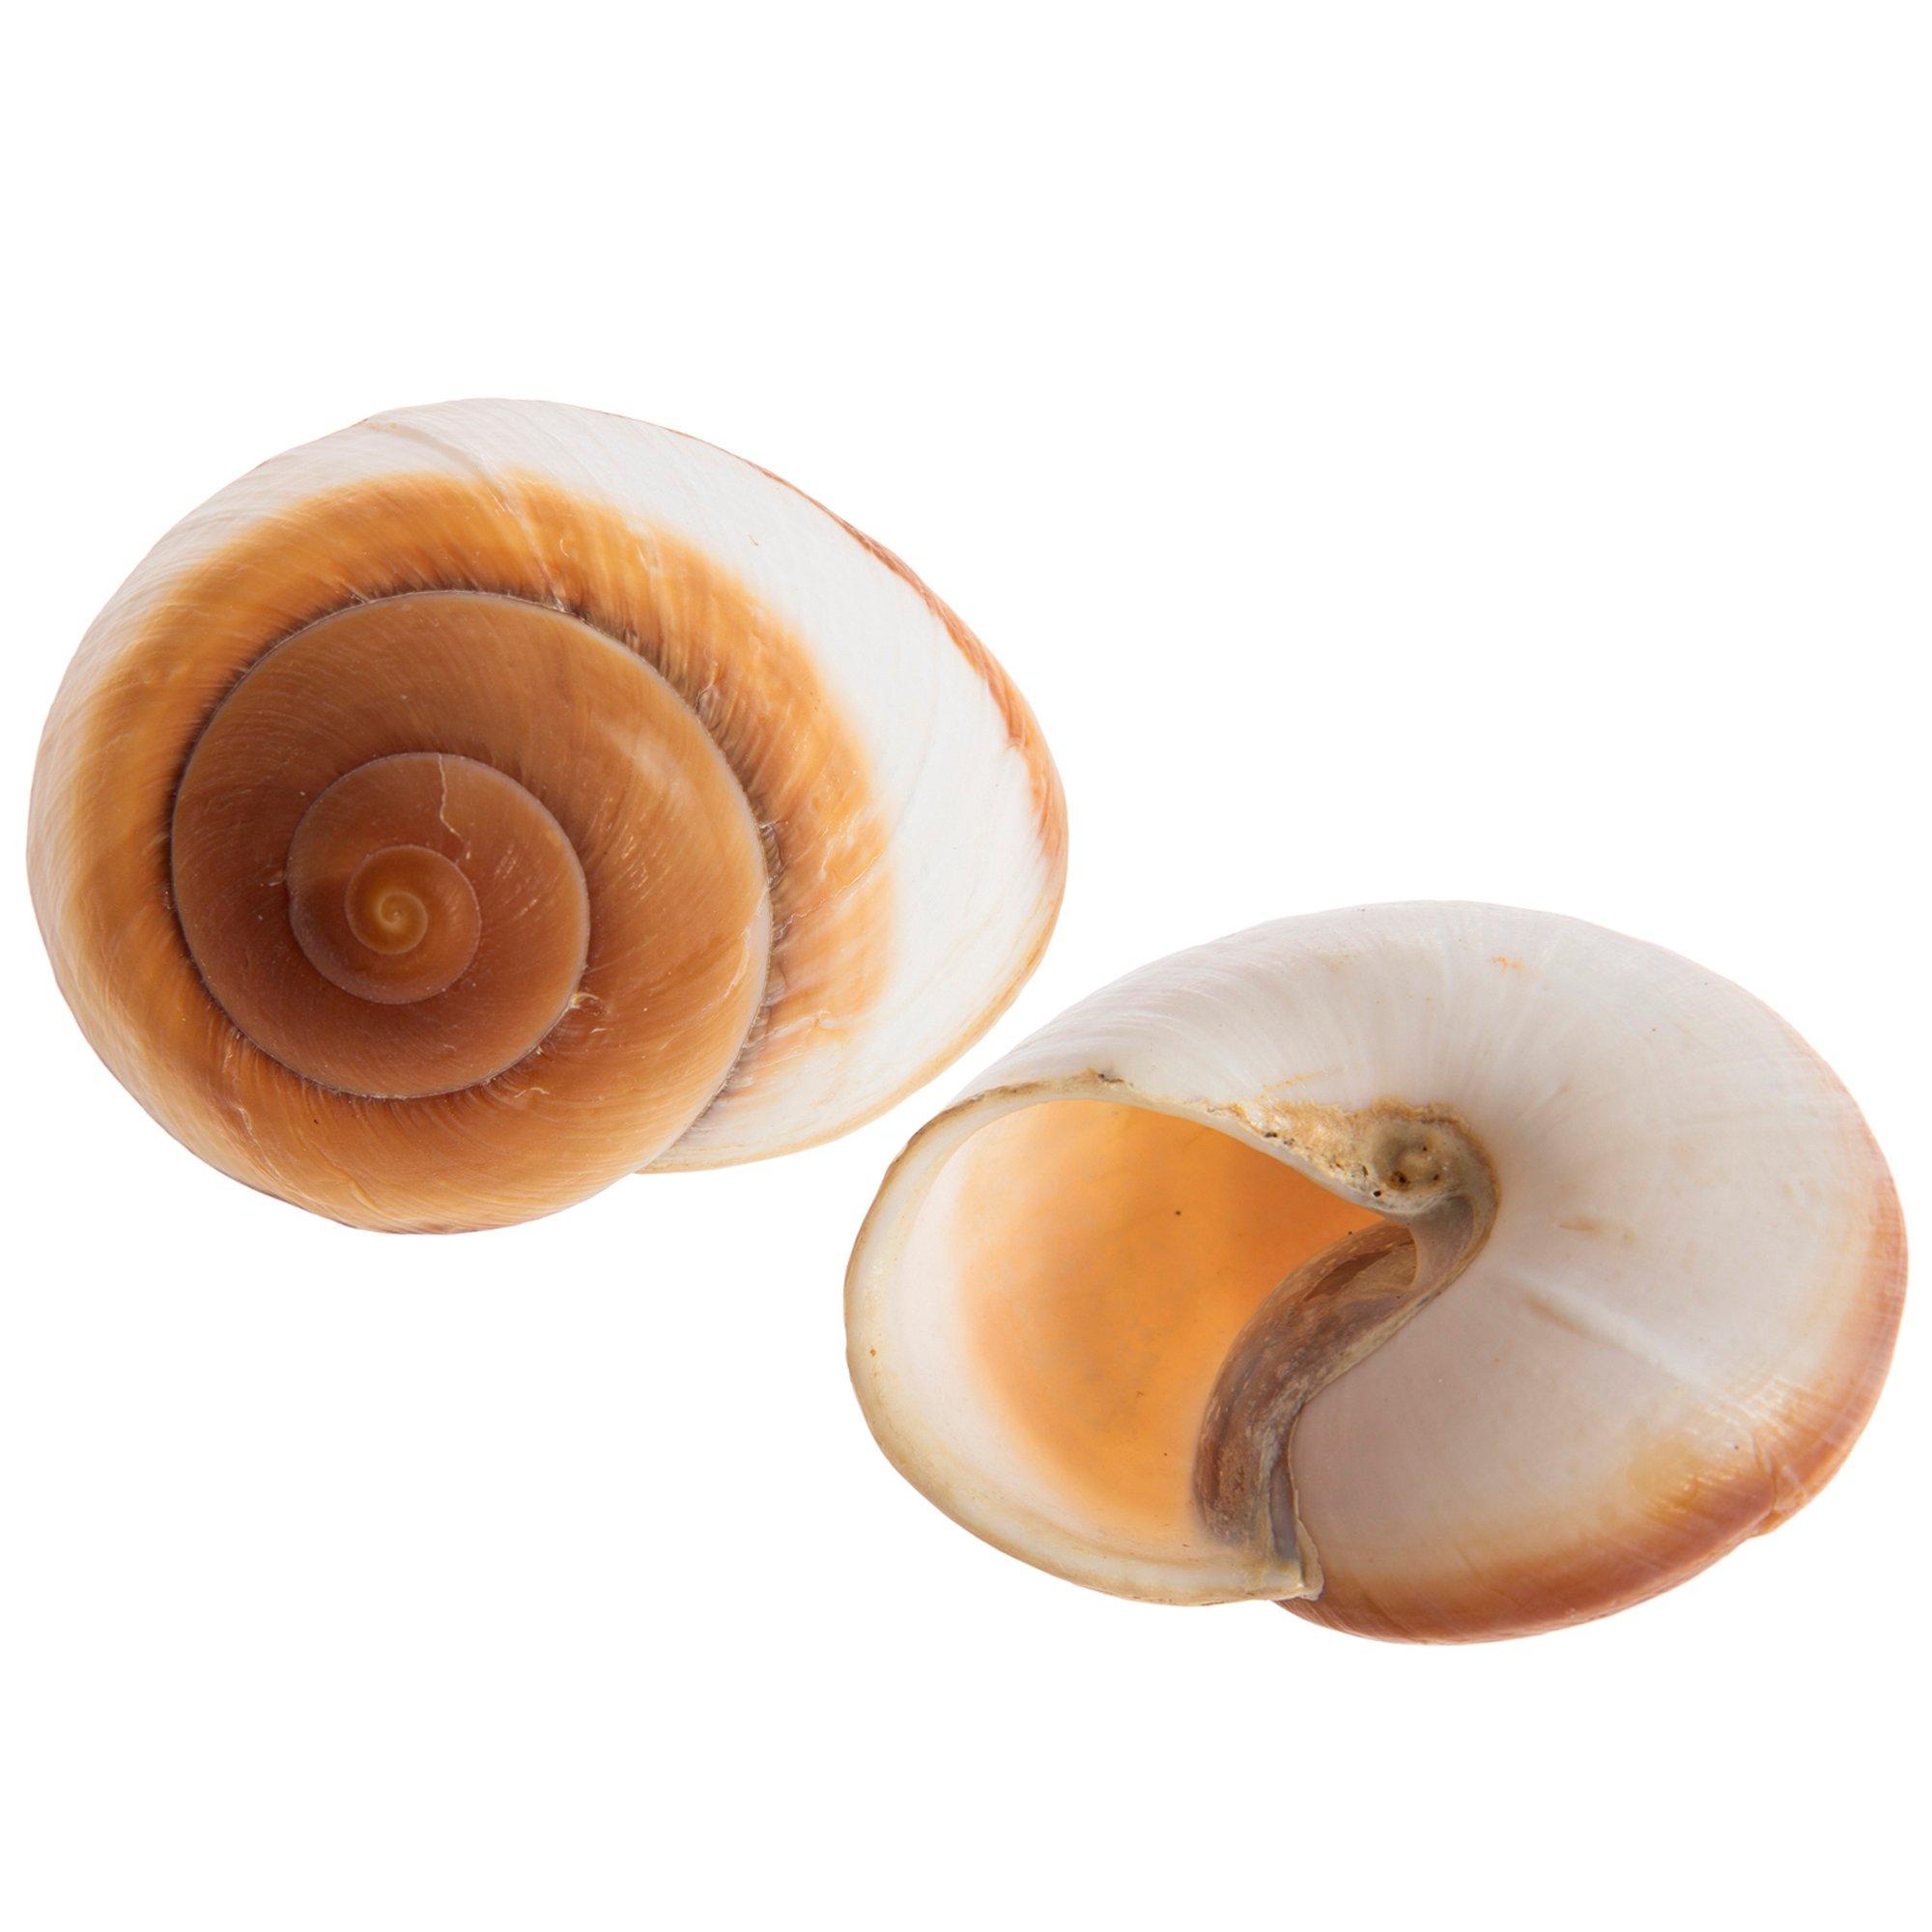 Land Snail Shells For Crafts Large Size Brown Color, 1 12 - 2